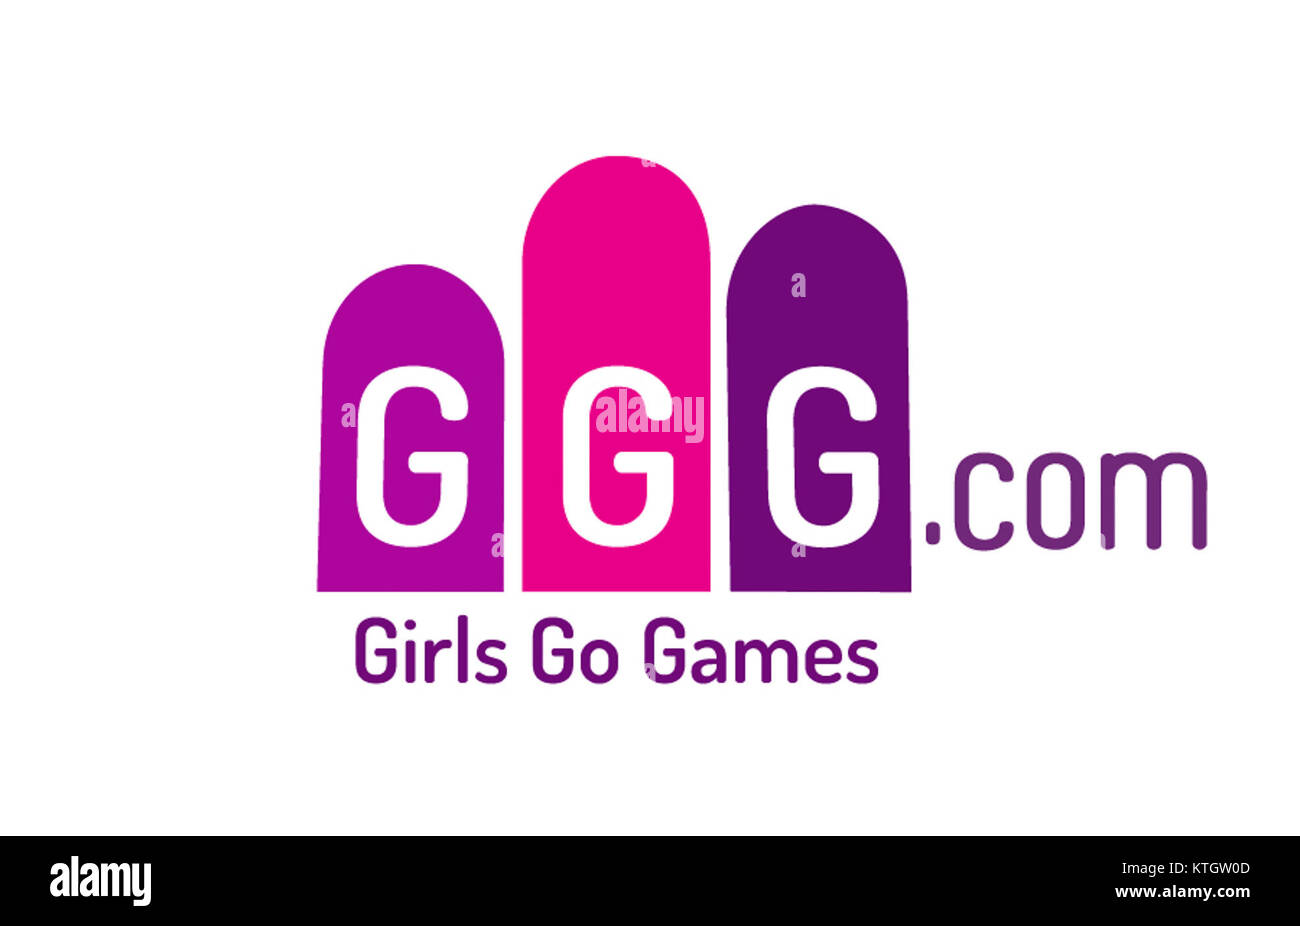 Kids - Free online Games for Girls - GGG.com